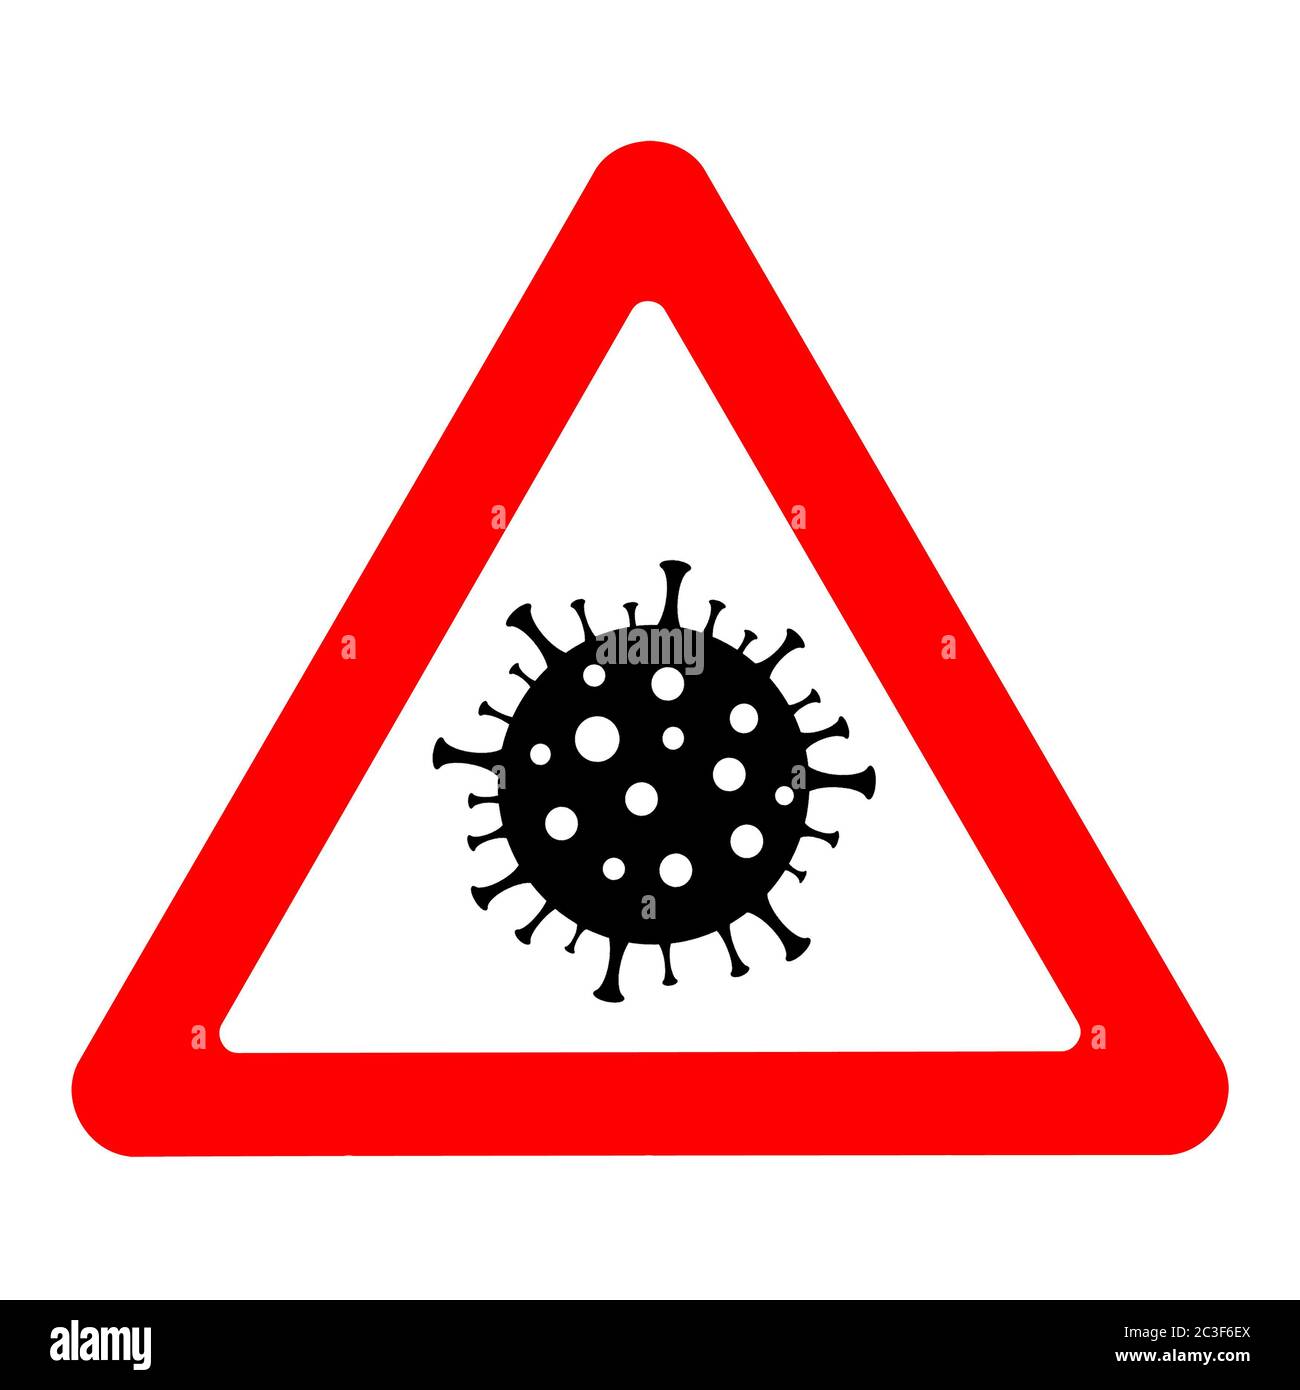 Coronavirus warning sign. Pandemic outbreak medical concept. Stock Photo